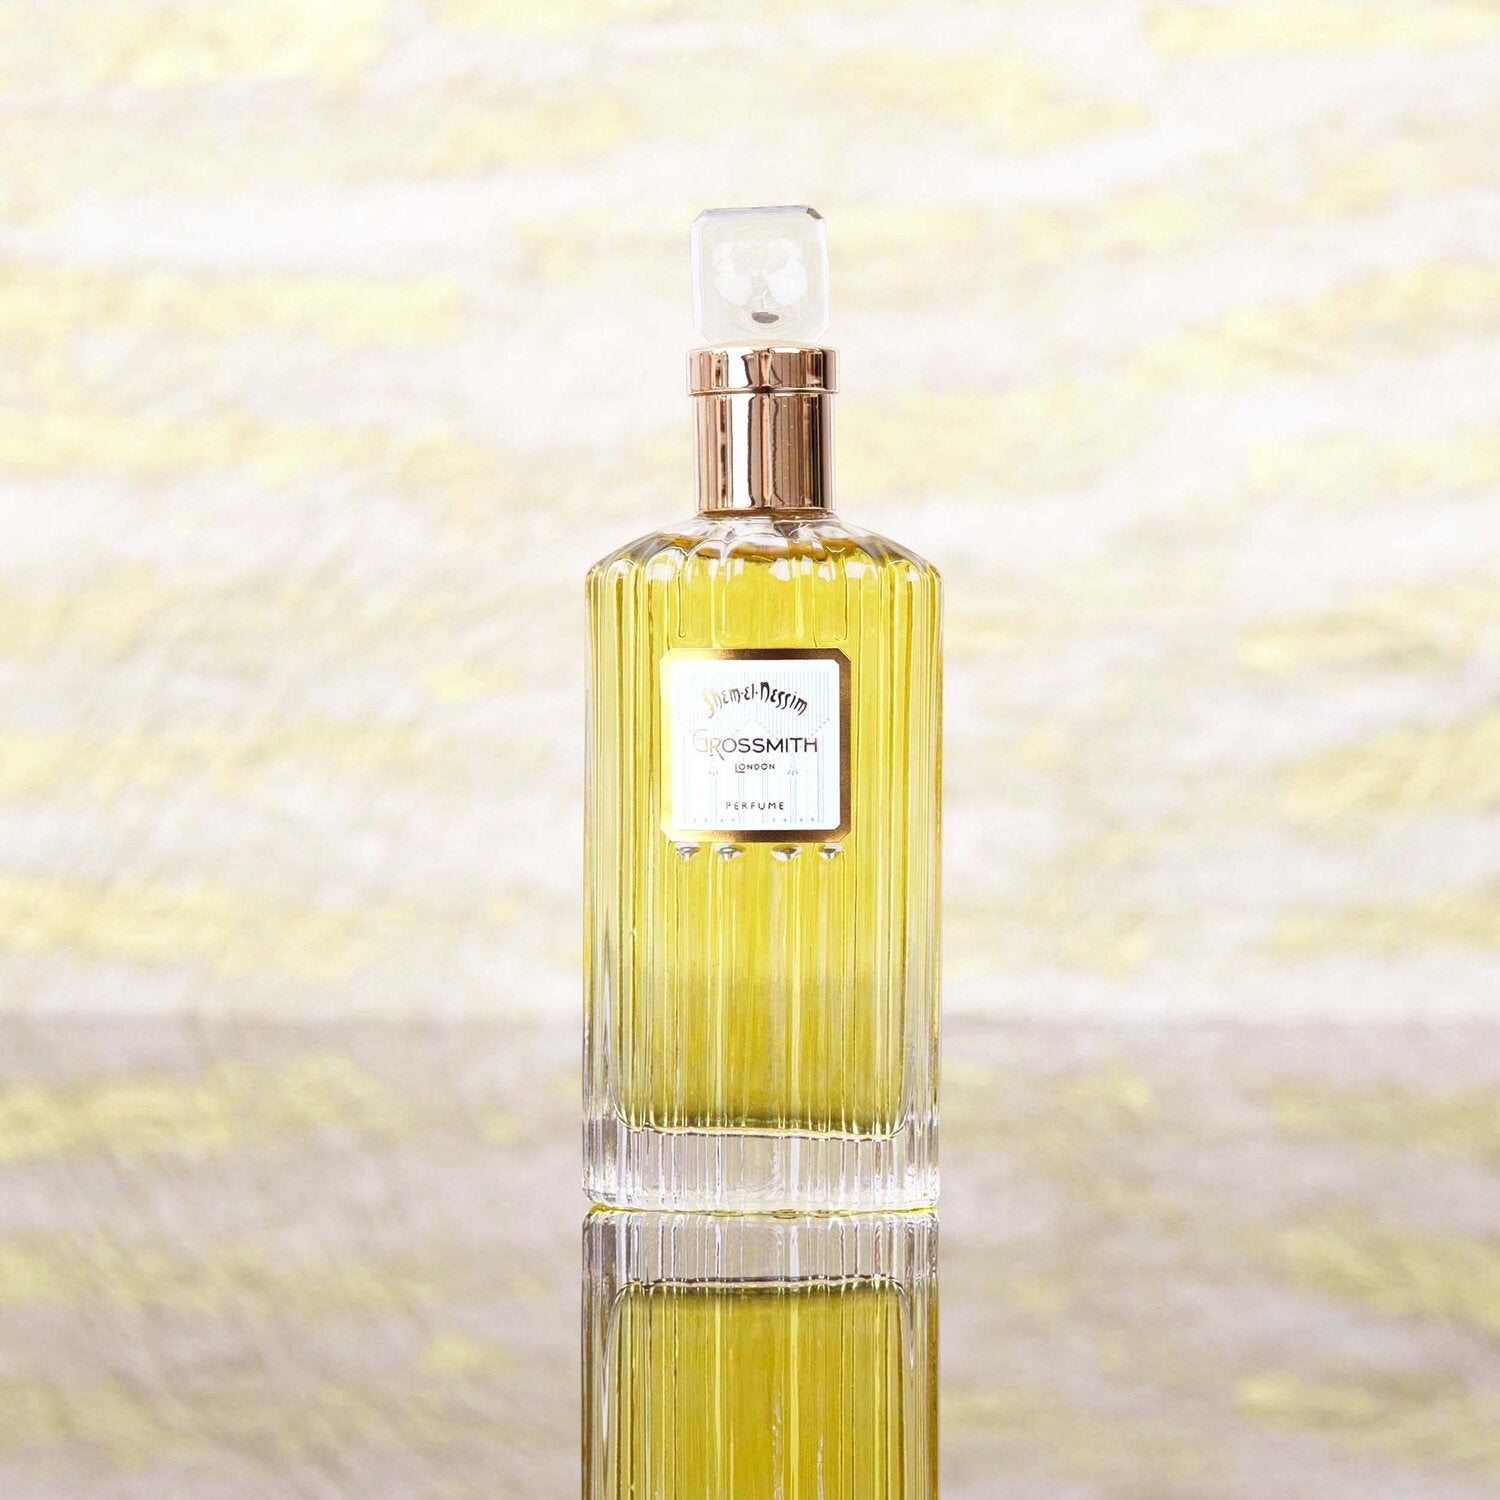 Shem el Nessim 100ml Eau de Parfum by Grossmith London